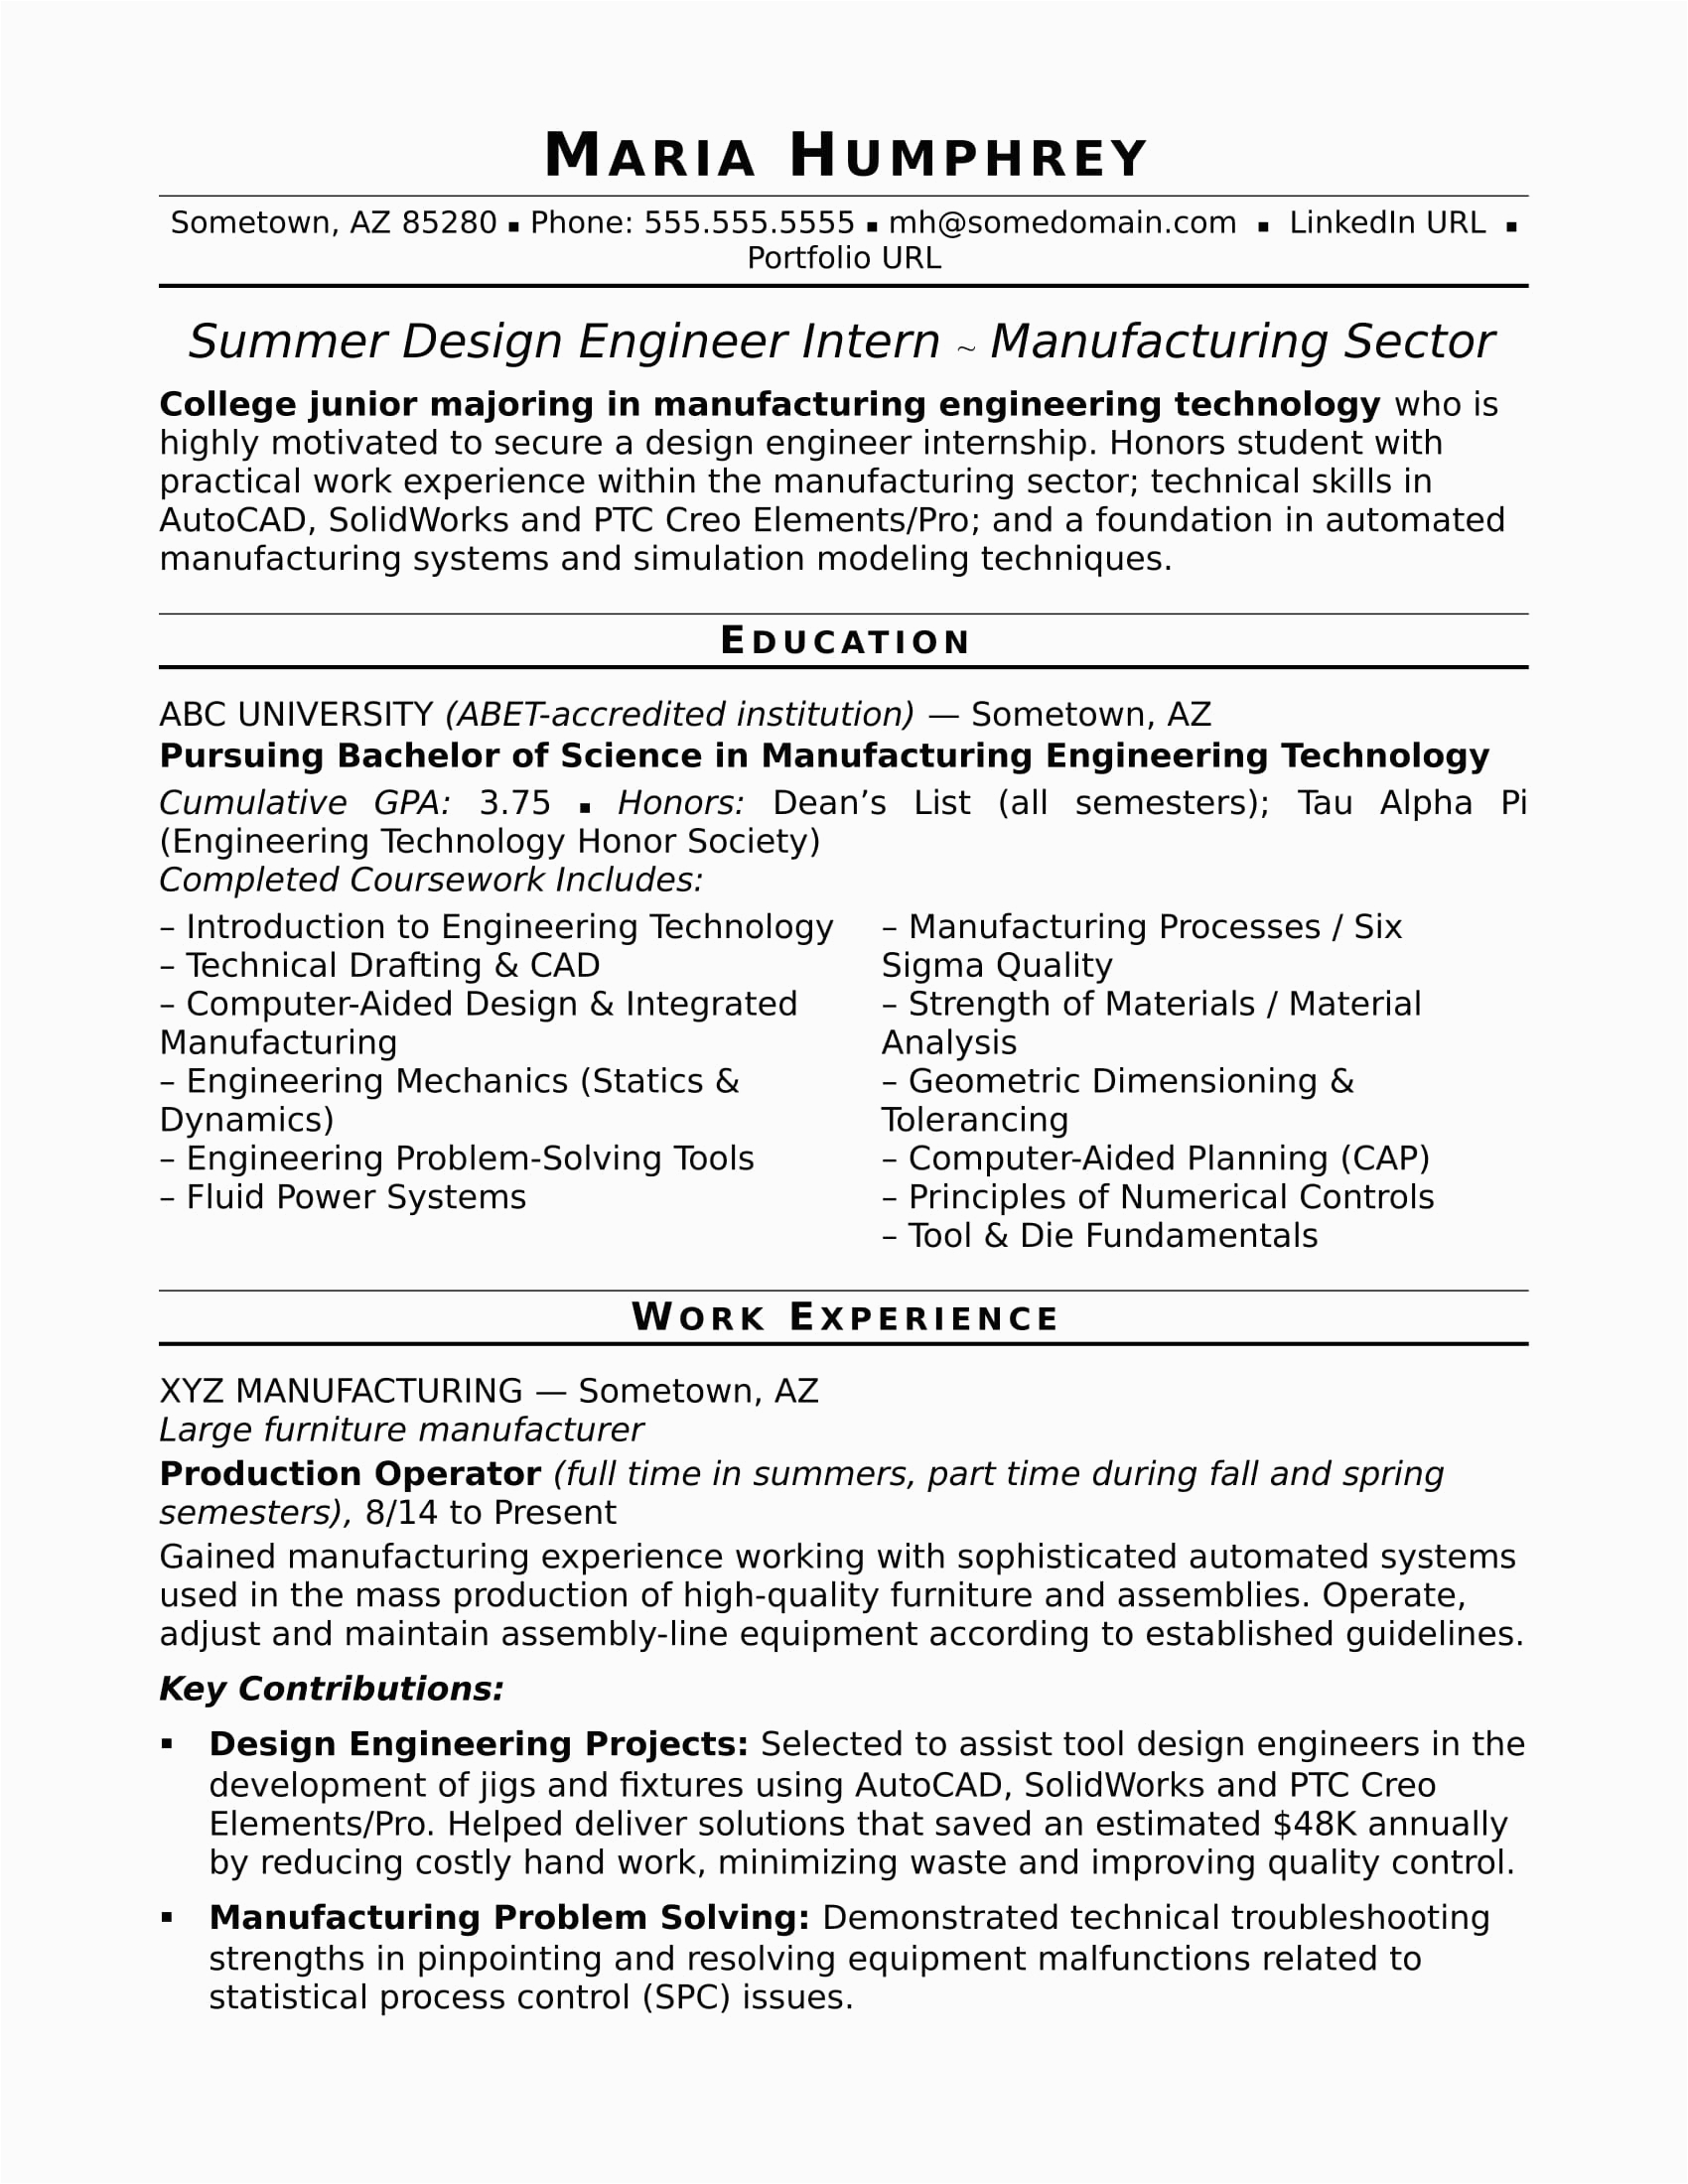 Entry Level Job with Internship Resume Sample Beginner College Student Resume format for Internship